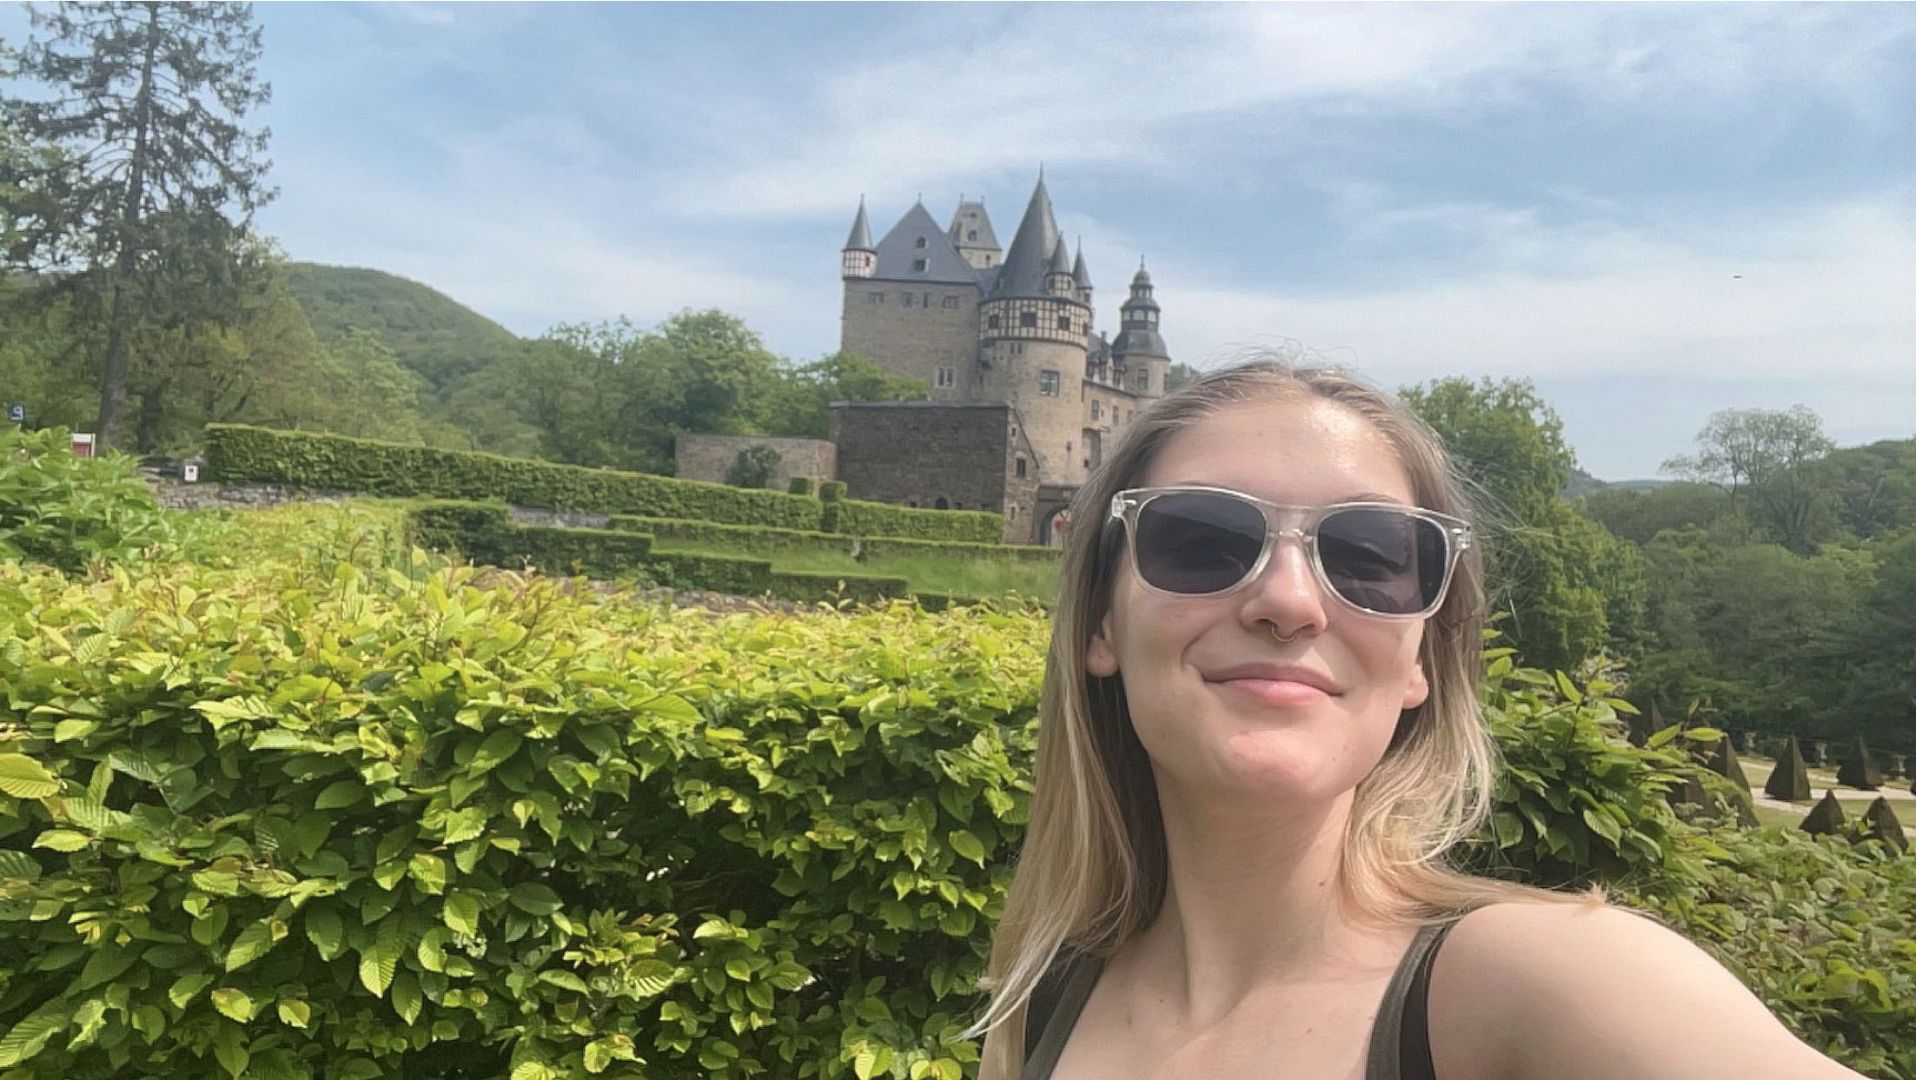 Paige taking a selfie in front of a German castle